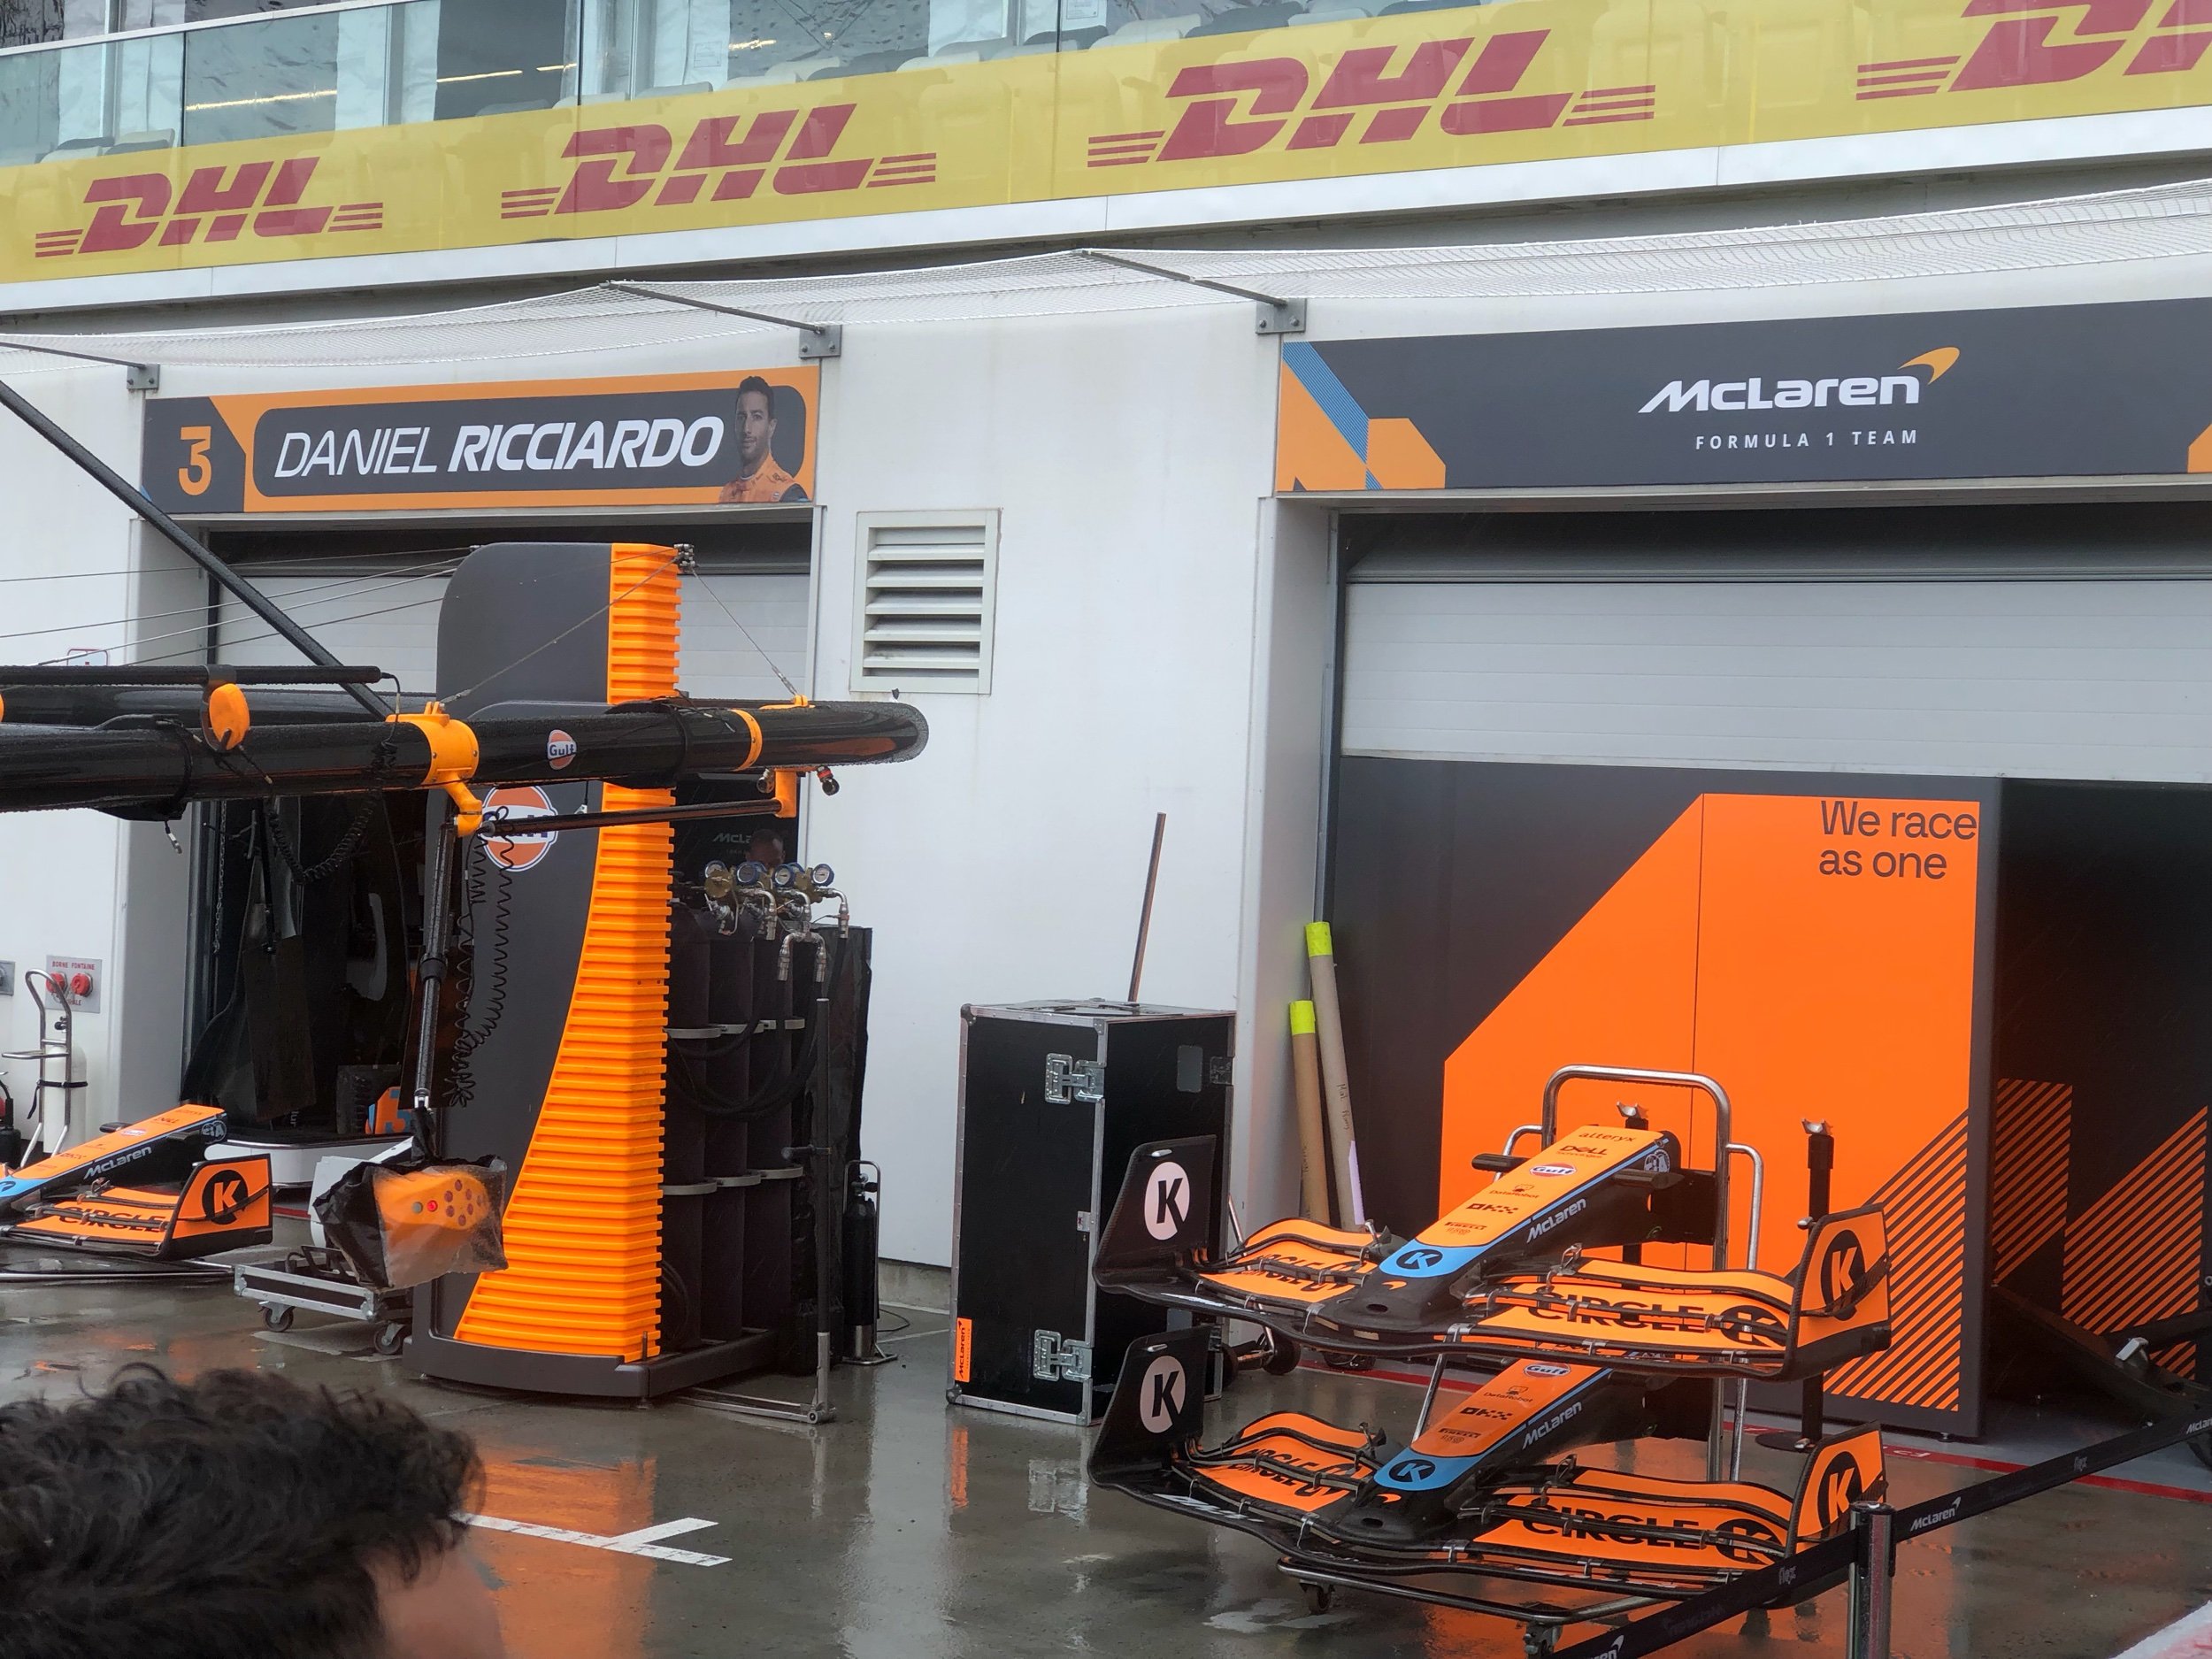  The McLaren garage. 